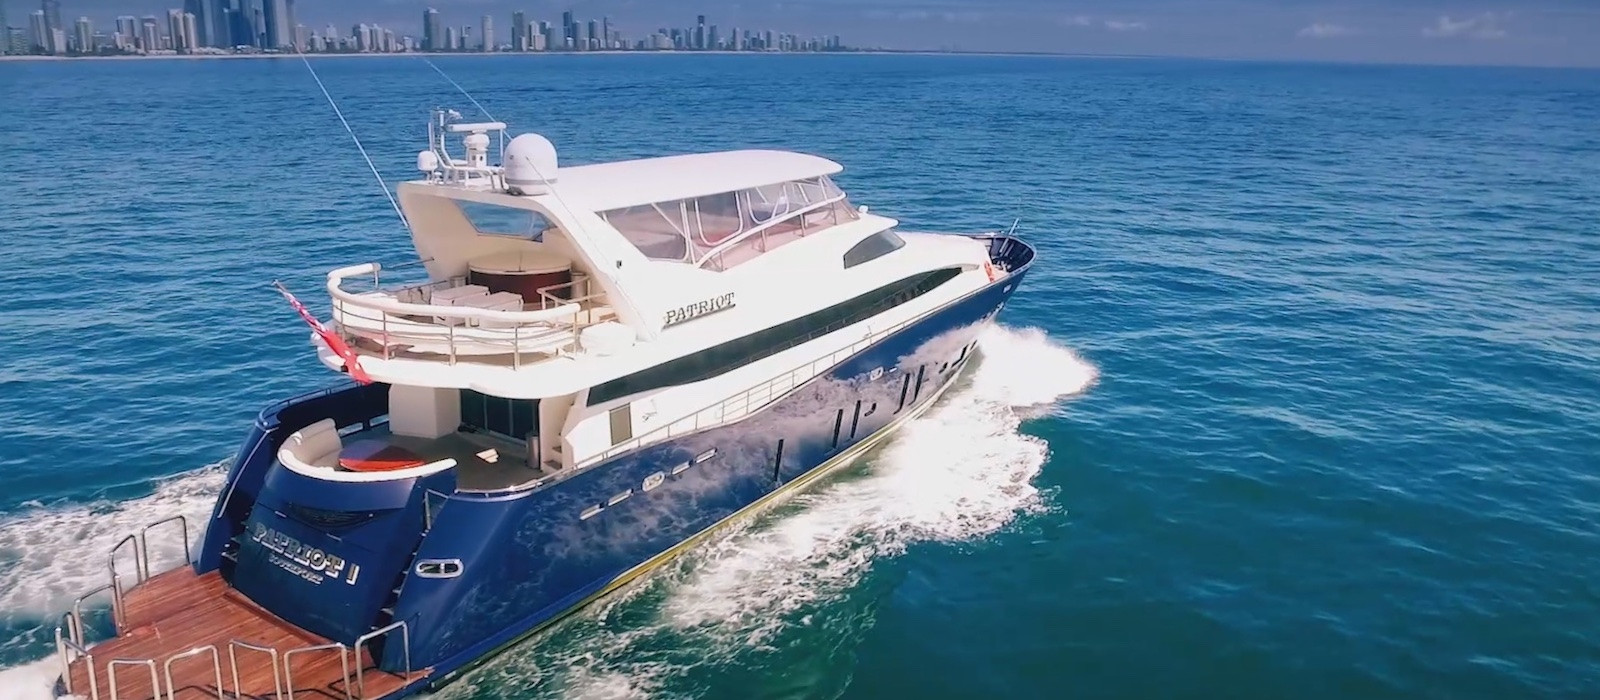 Patriot 1 luxury boat hire main profile image